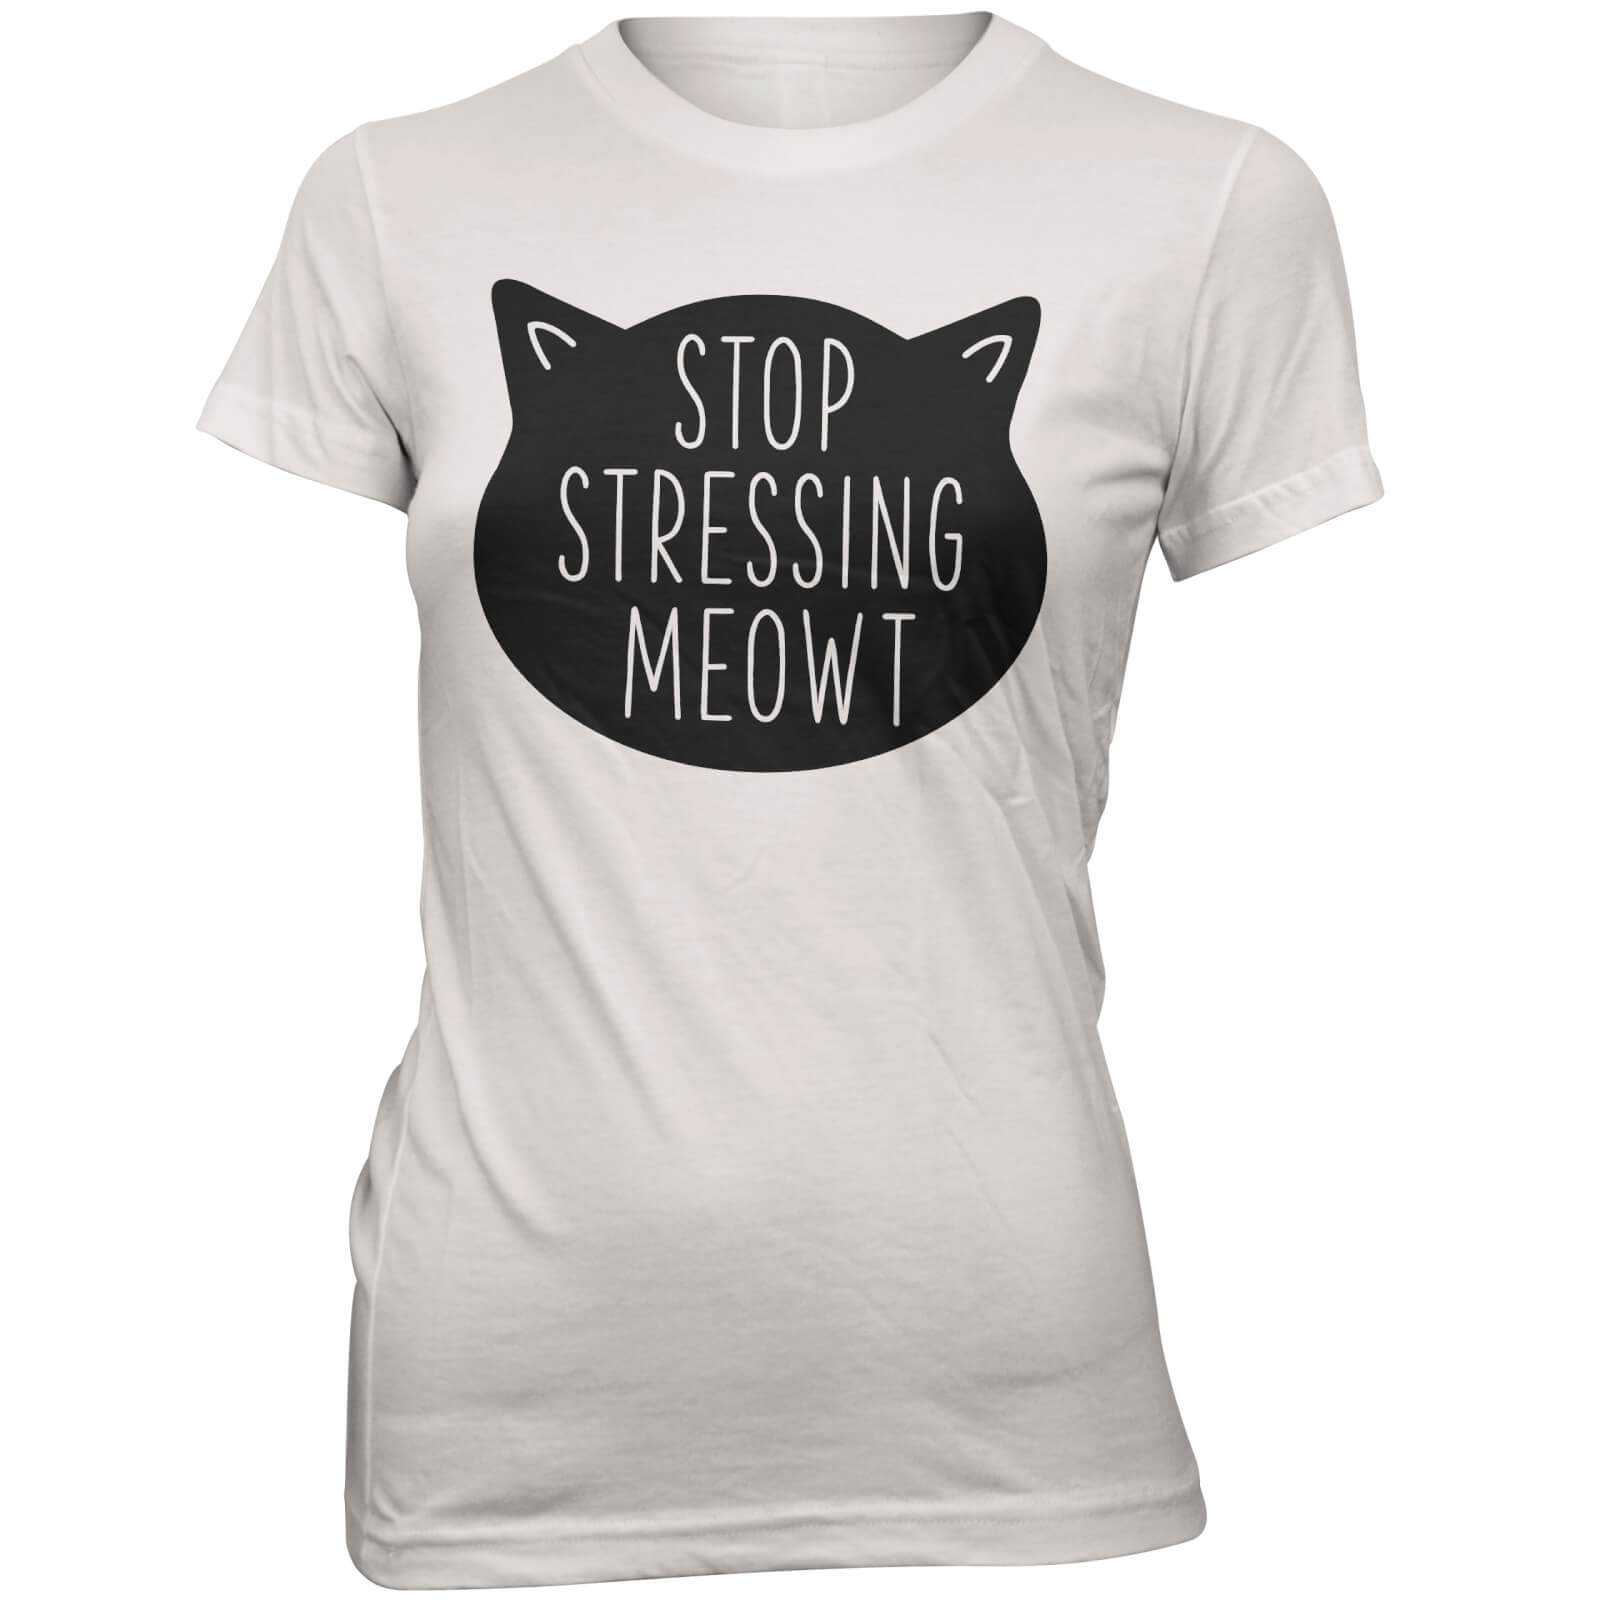 Stop Stressing Meowt Women's Slogan T-Shirt - S - White